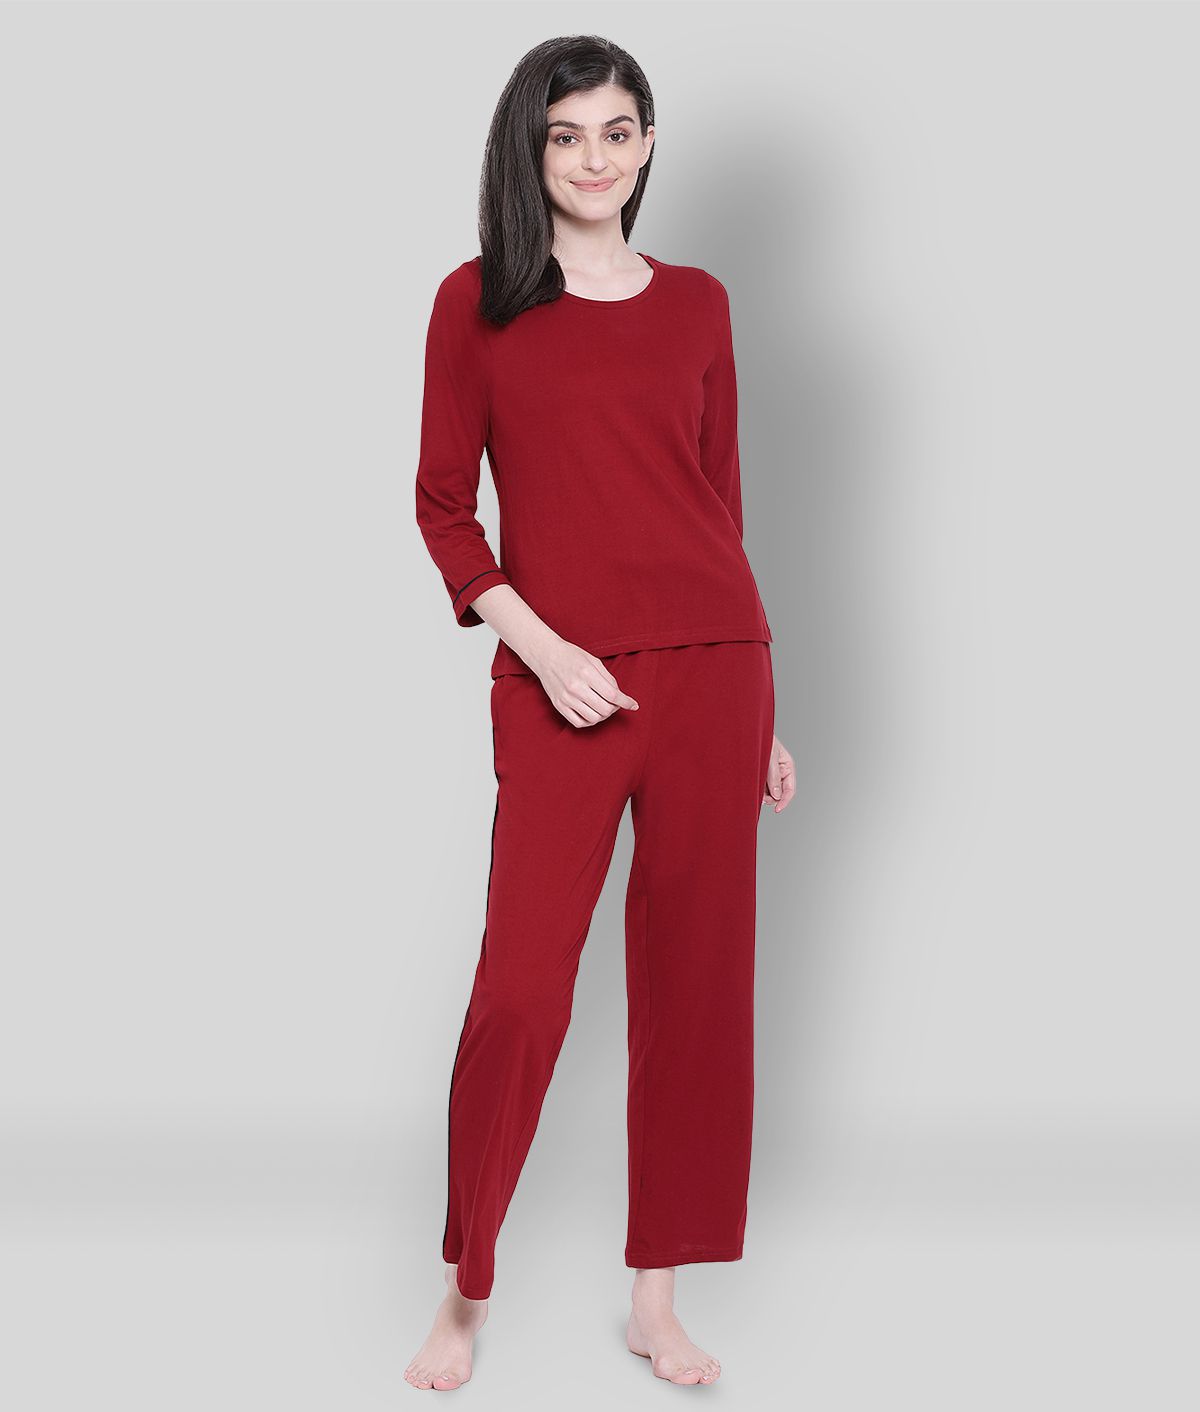     			Clovia - Red Cotton Women's Nightwear Nightsuit Sets ( Pack of 1 )